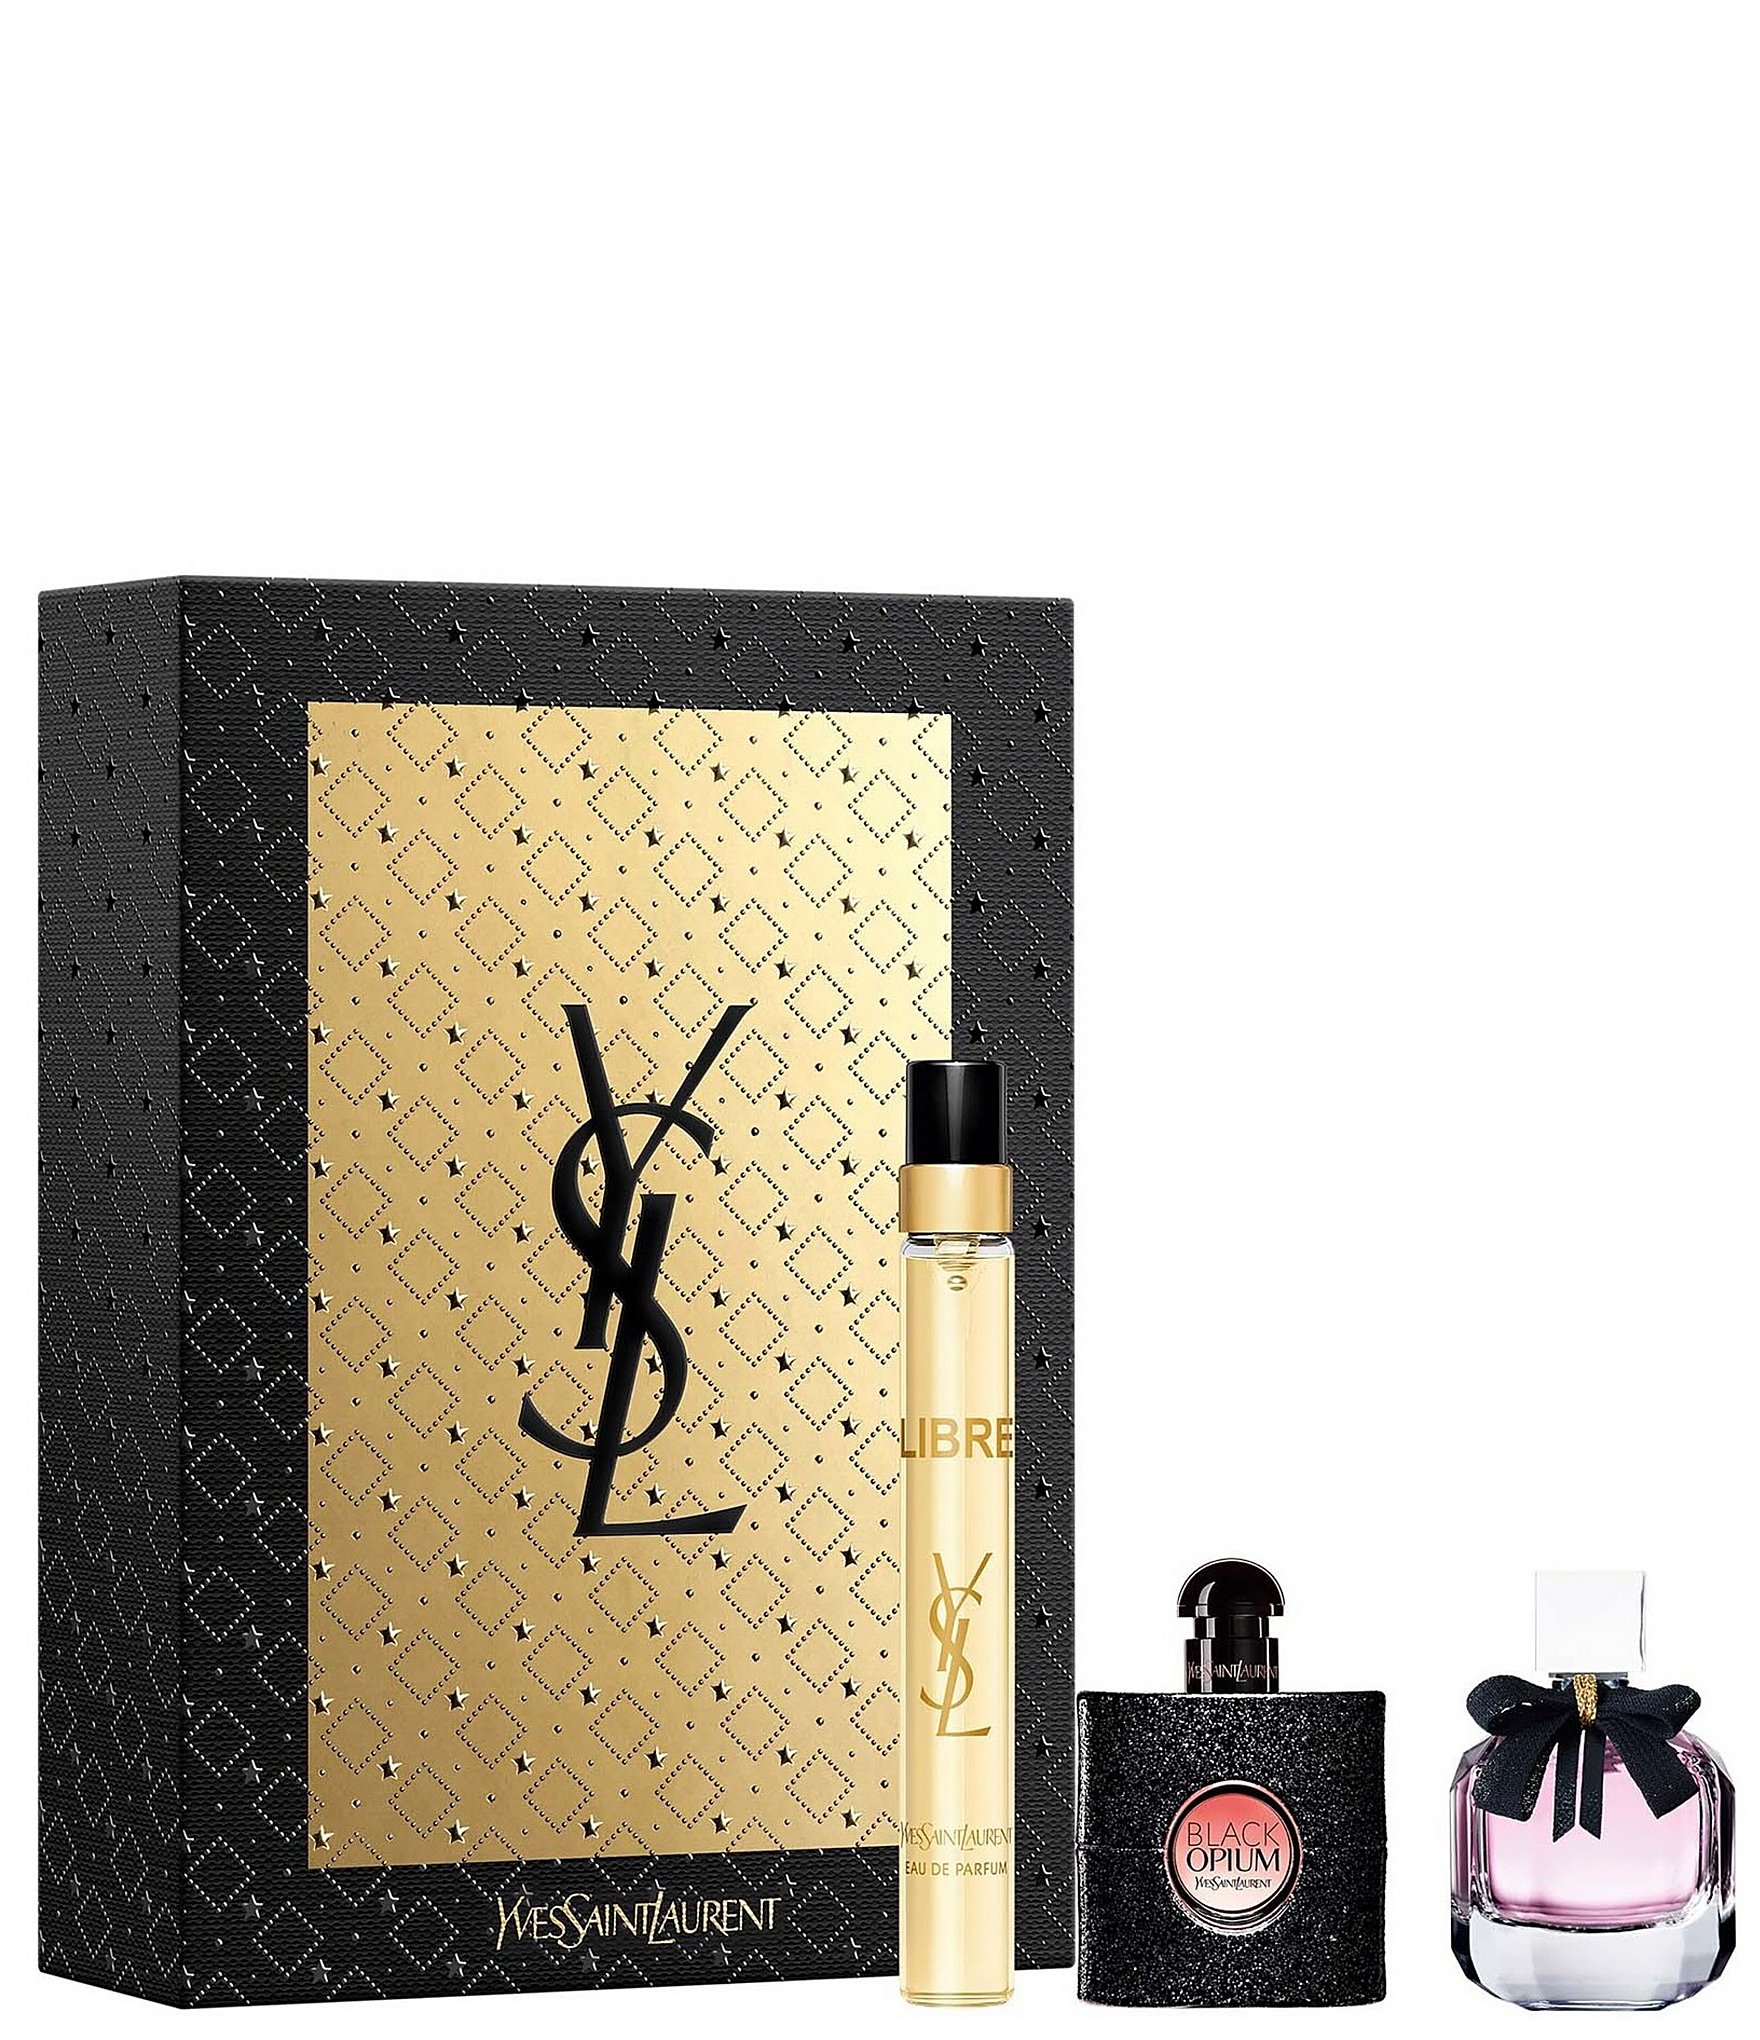 Yves Saint Laurent Beaute Libre, Black Opium and Mon Paris Discovery Trio Fragrance  Sampler Gift Set